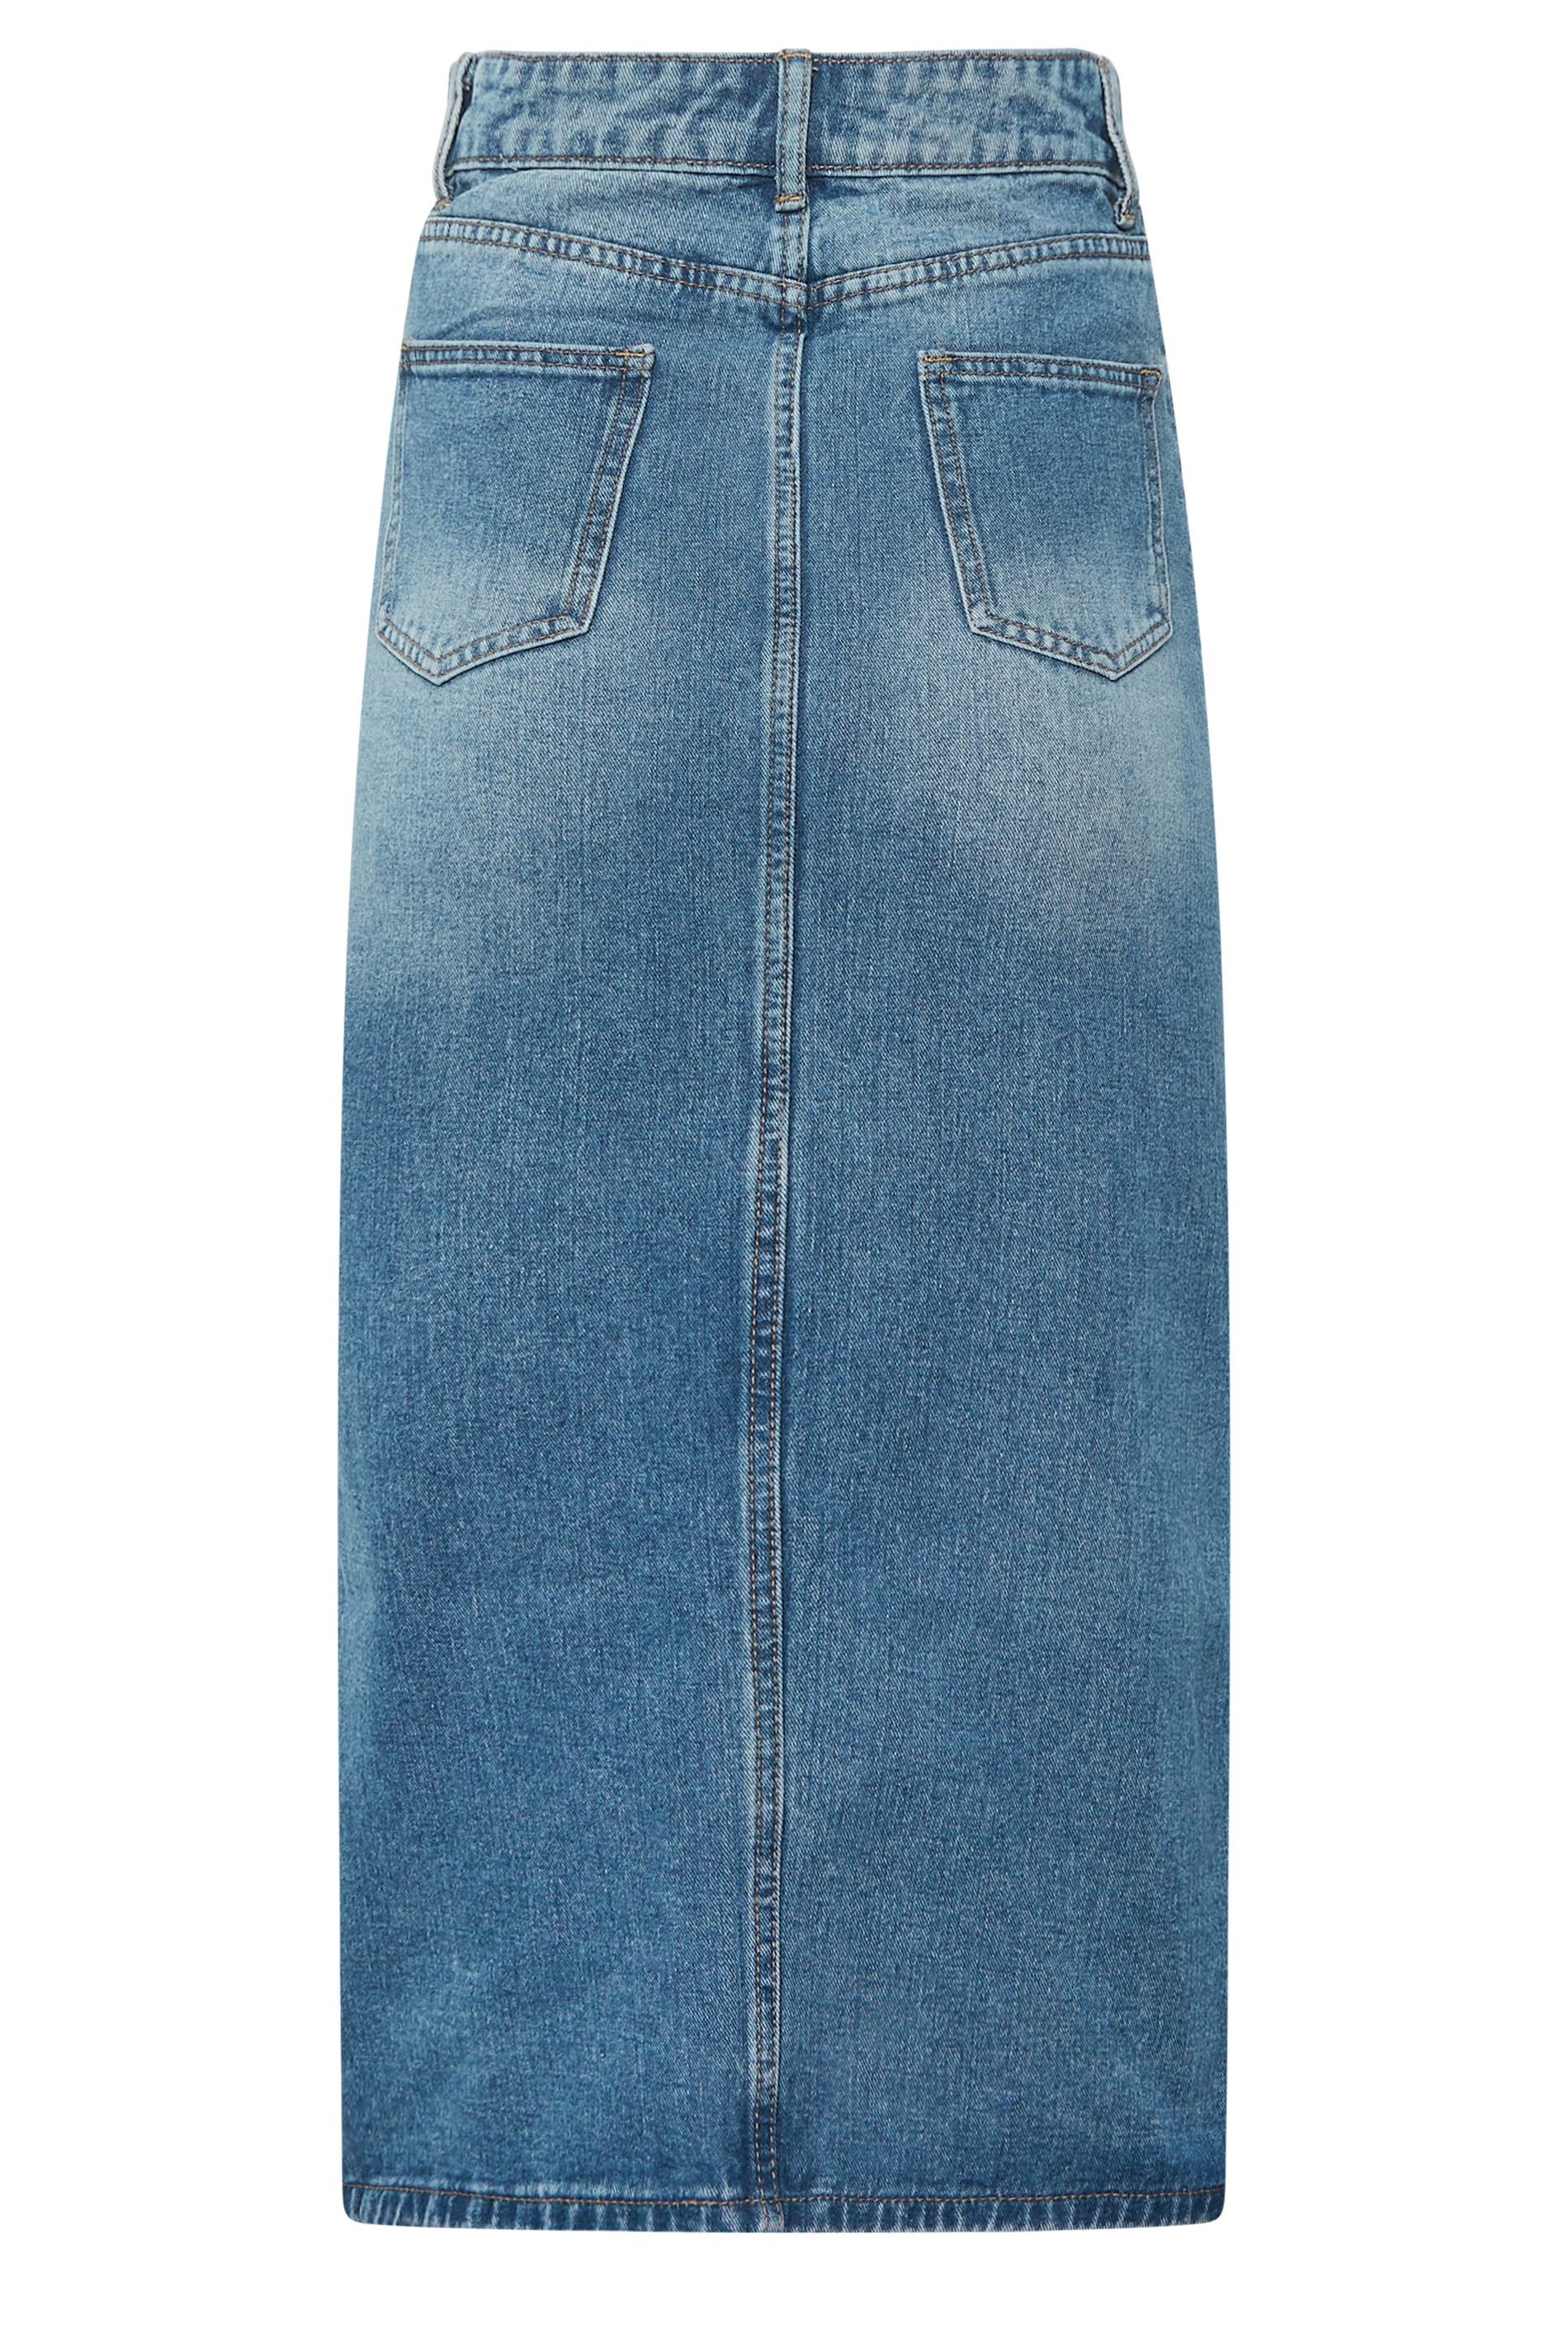 YOURS PETITE Plus Size Curve Blue Denim Midi Skirt | Yours Clothing  2